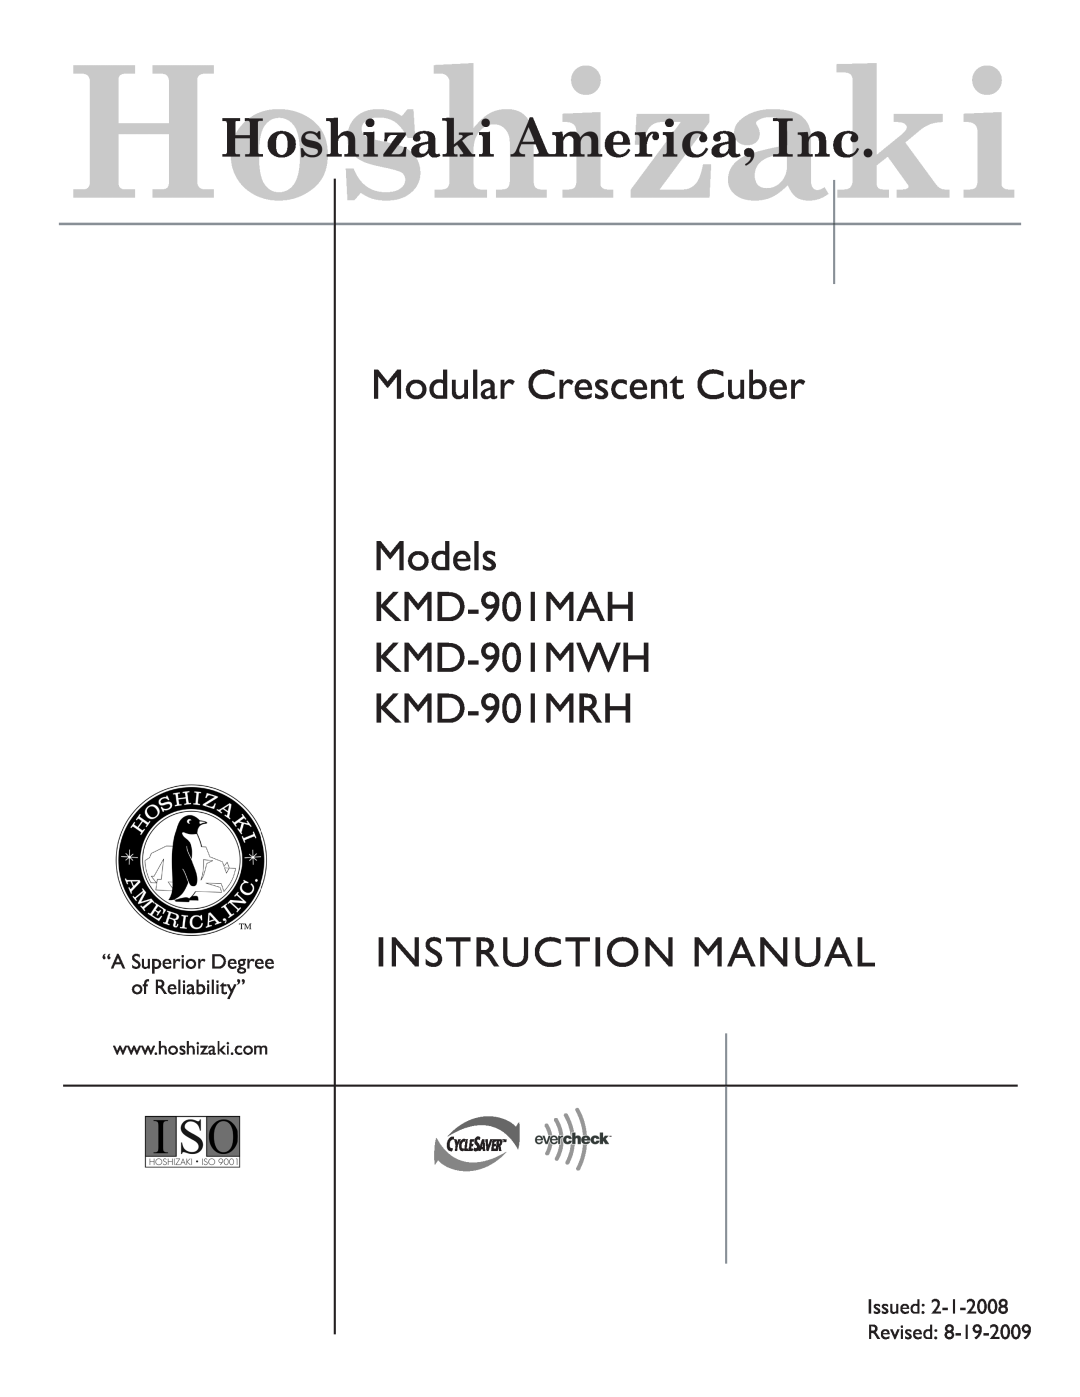 Hoshizaki instruction manual Modular Crescent Cuber Models KMD-901MAH KMD-901MWH KMD-901MRH 